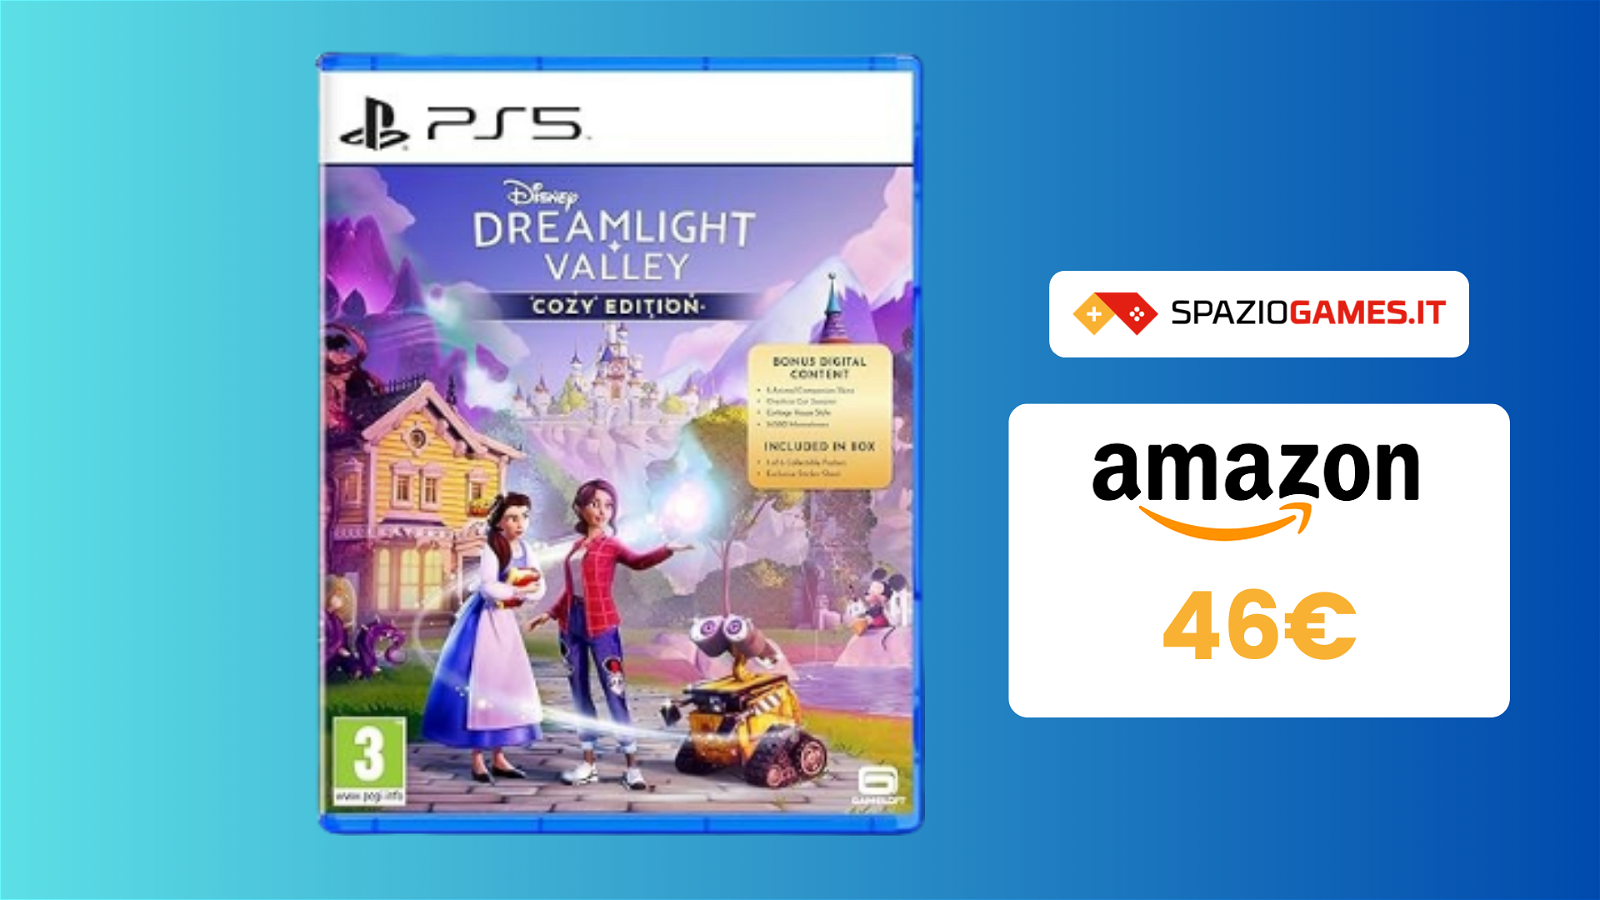 Disney Dreamlight Valley Cozy Edition per PS5 a soli 46€!